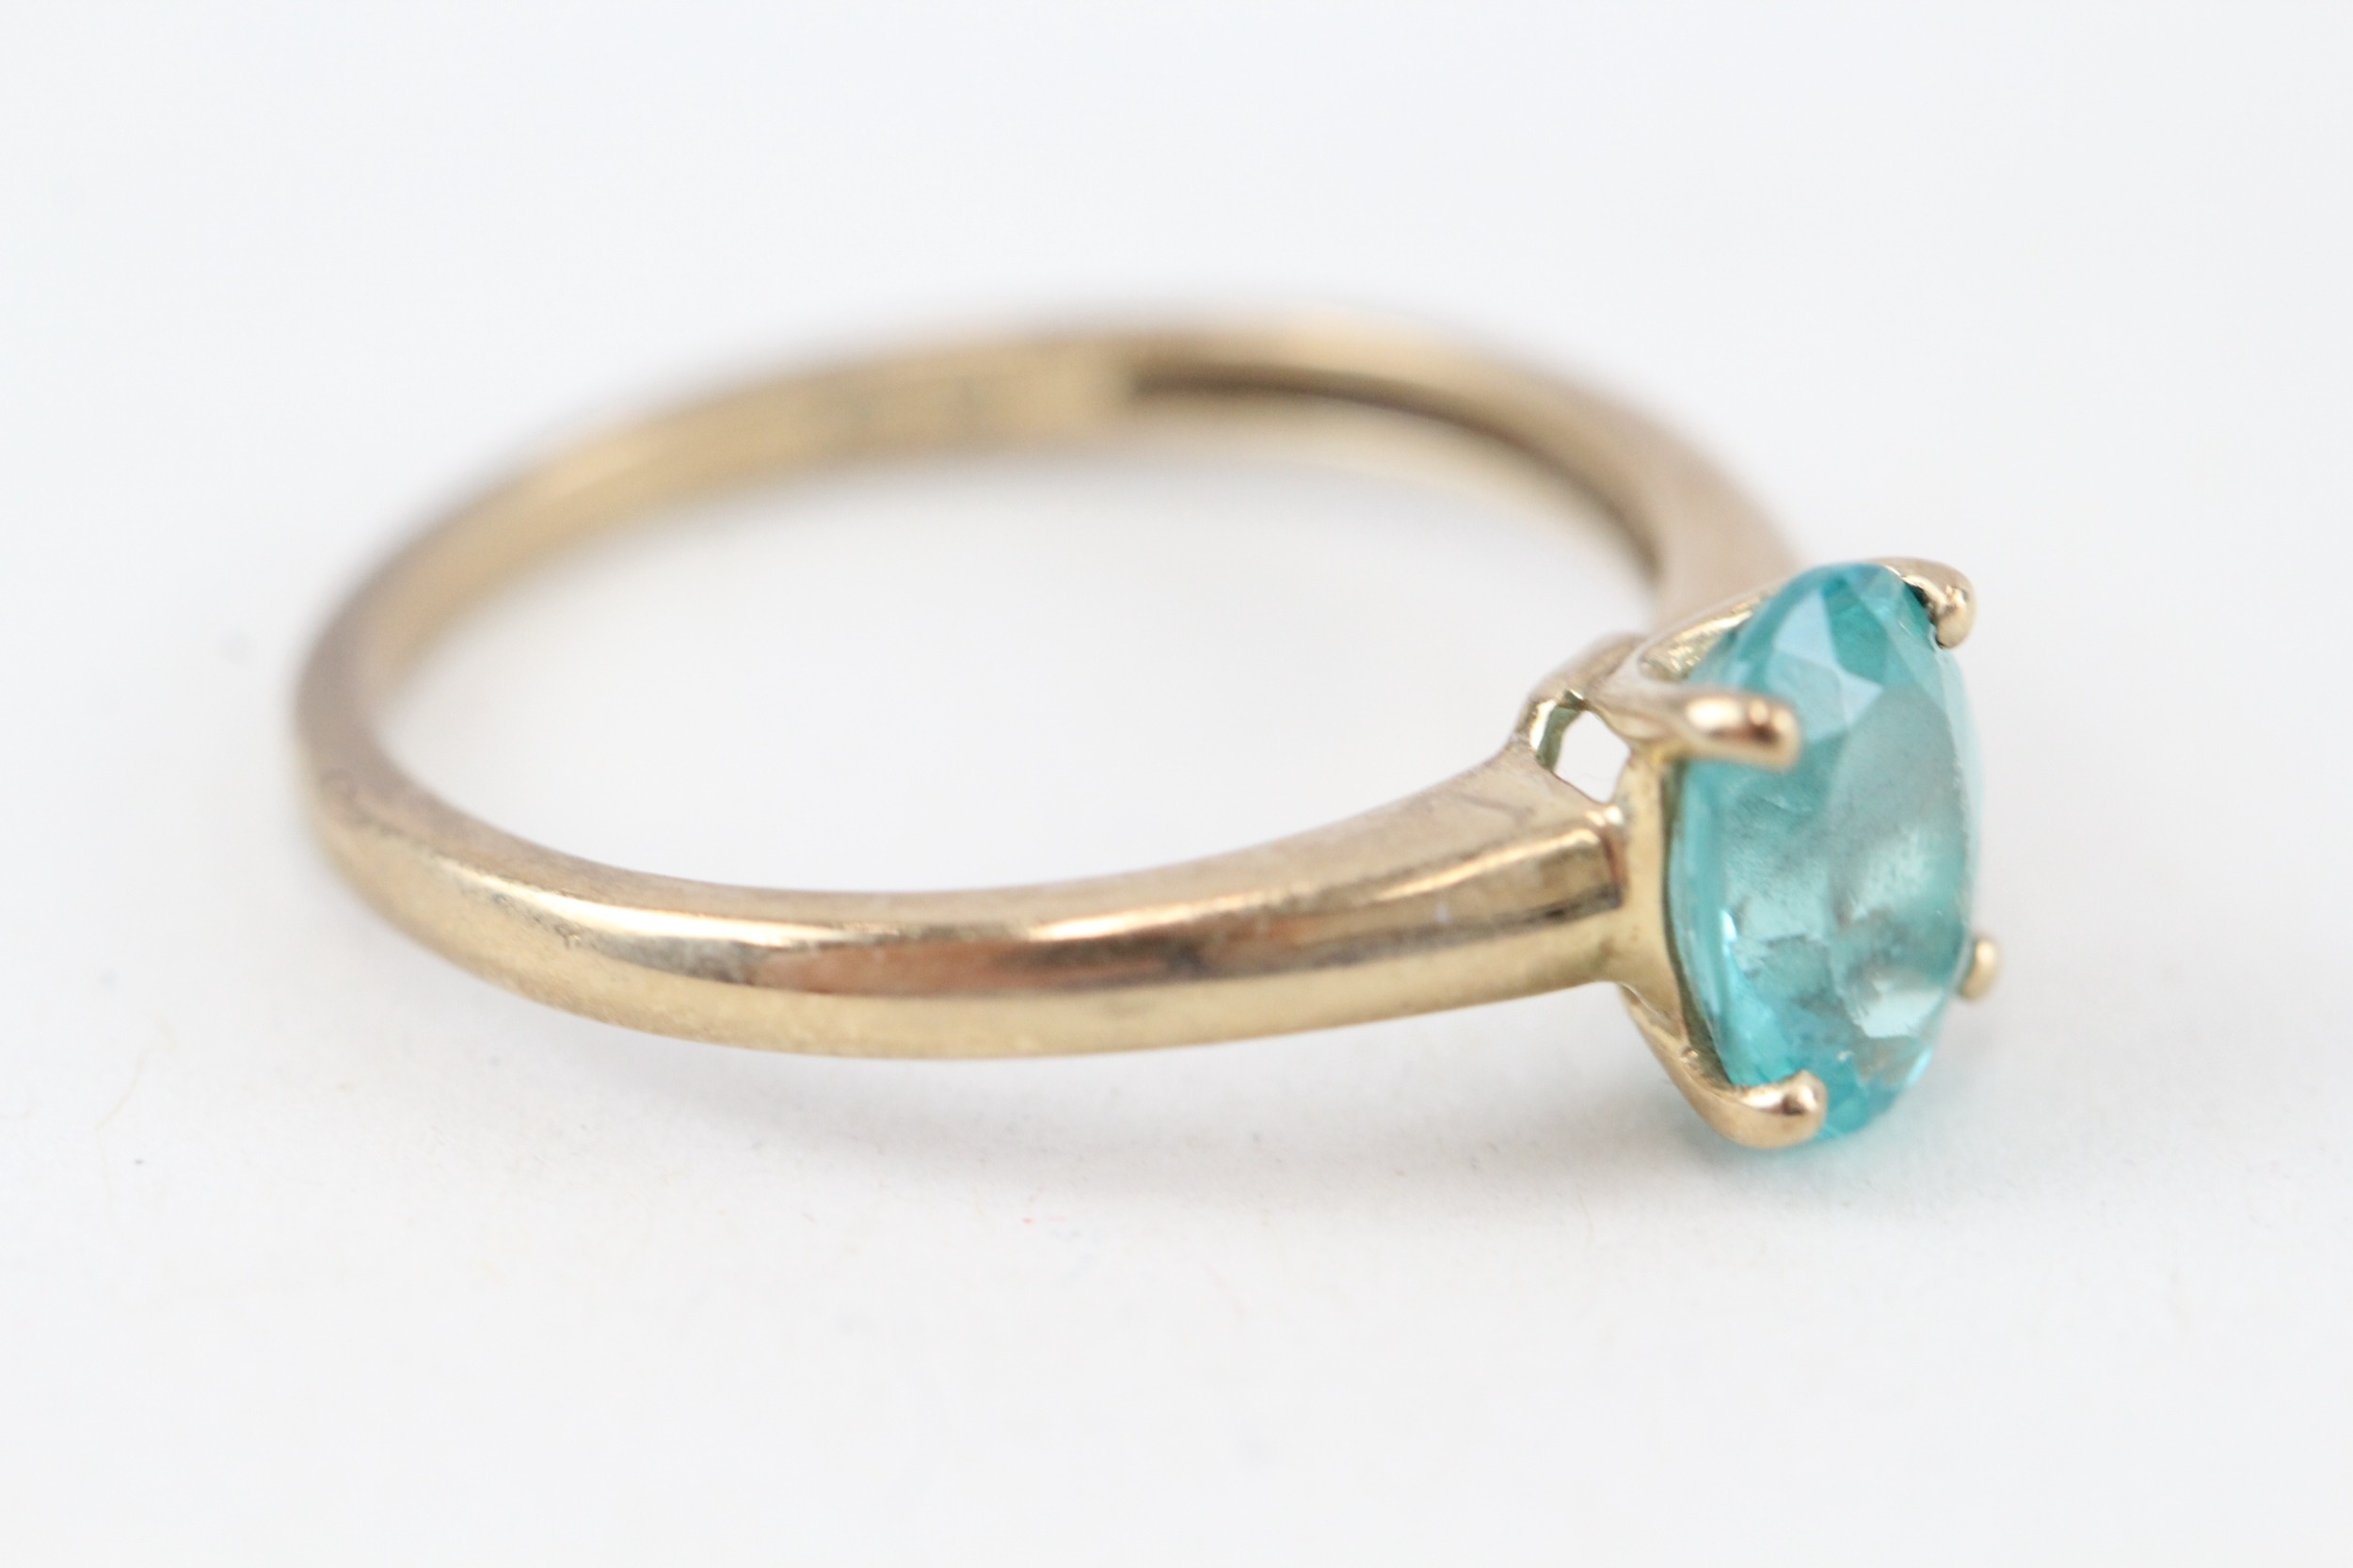 9ct gold blue gemstone ring (1.8g) - Image 2 of 4